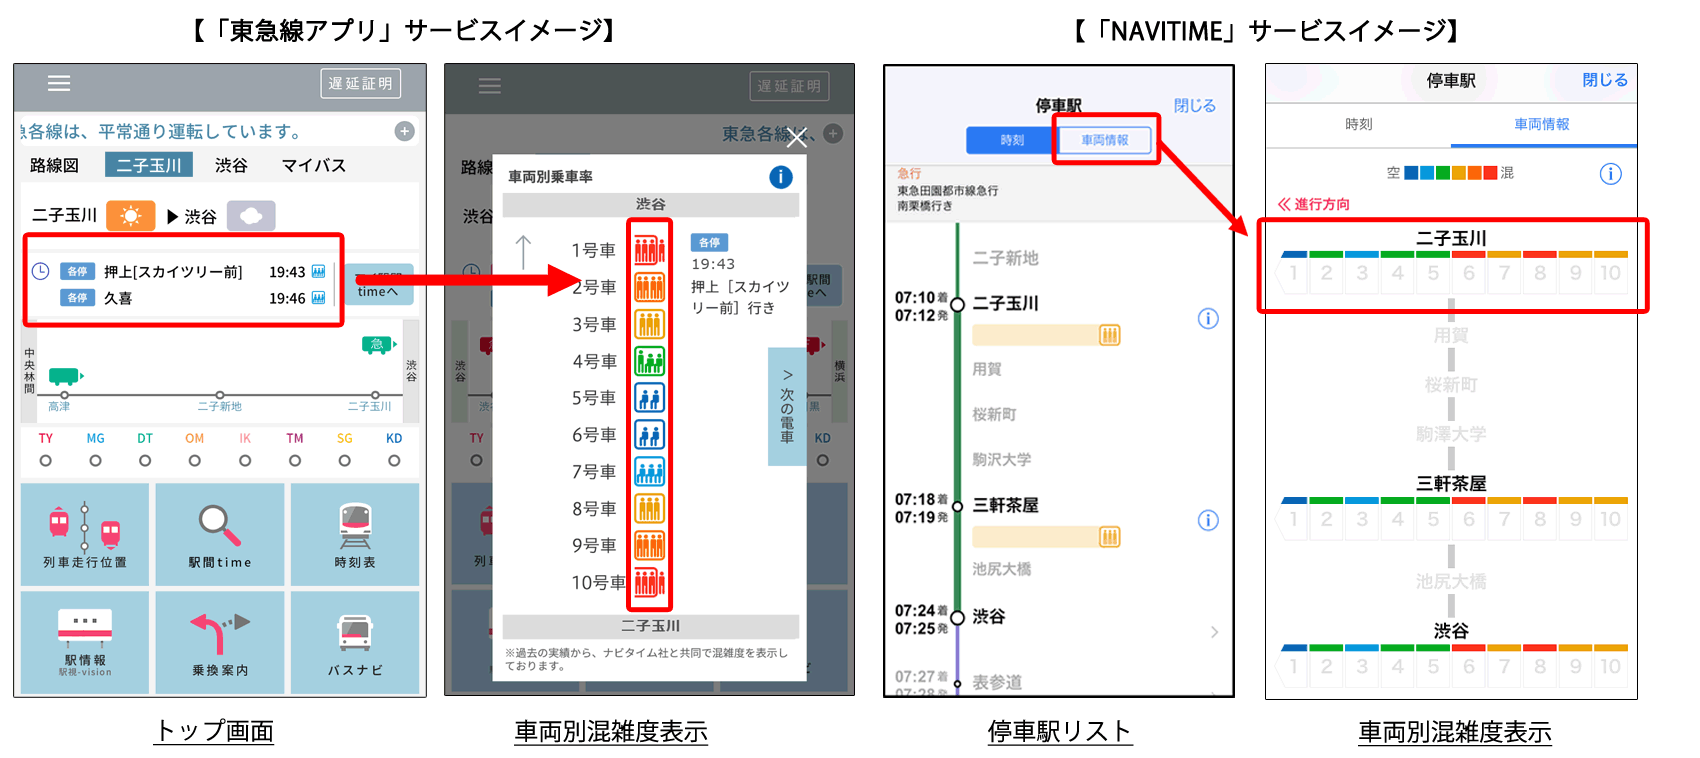 http://corporate.navitime.co.jp/topics/0623_main%20image.gif